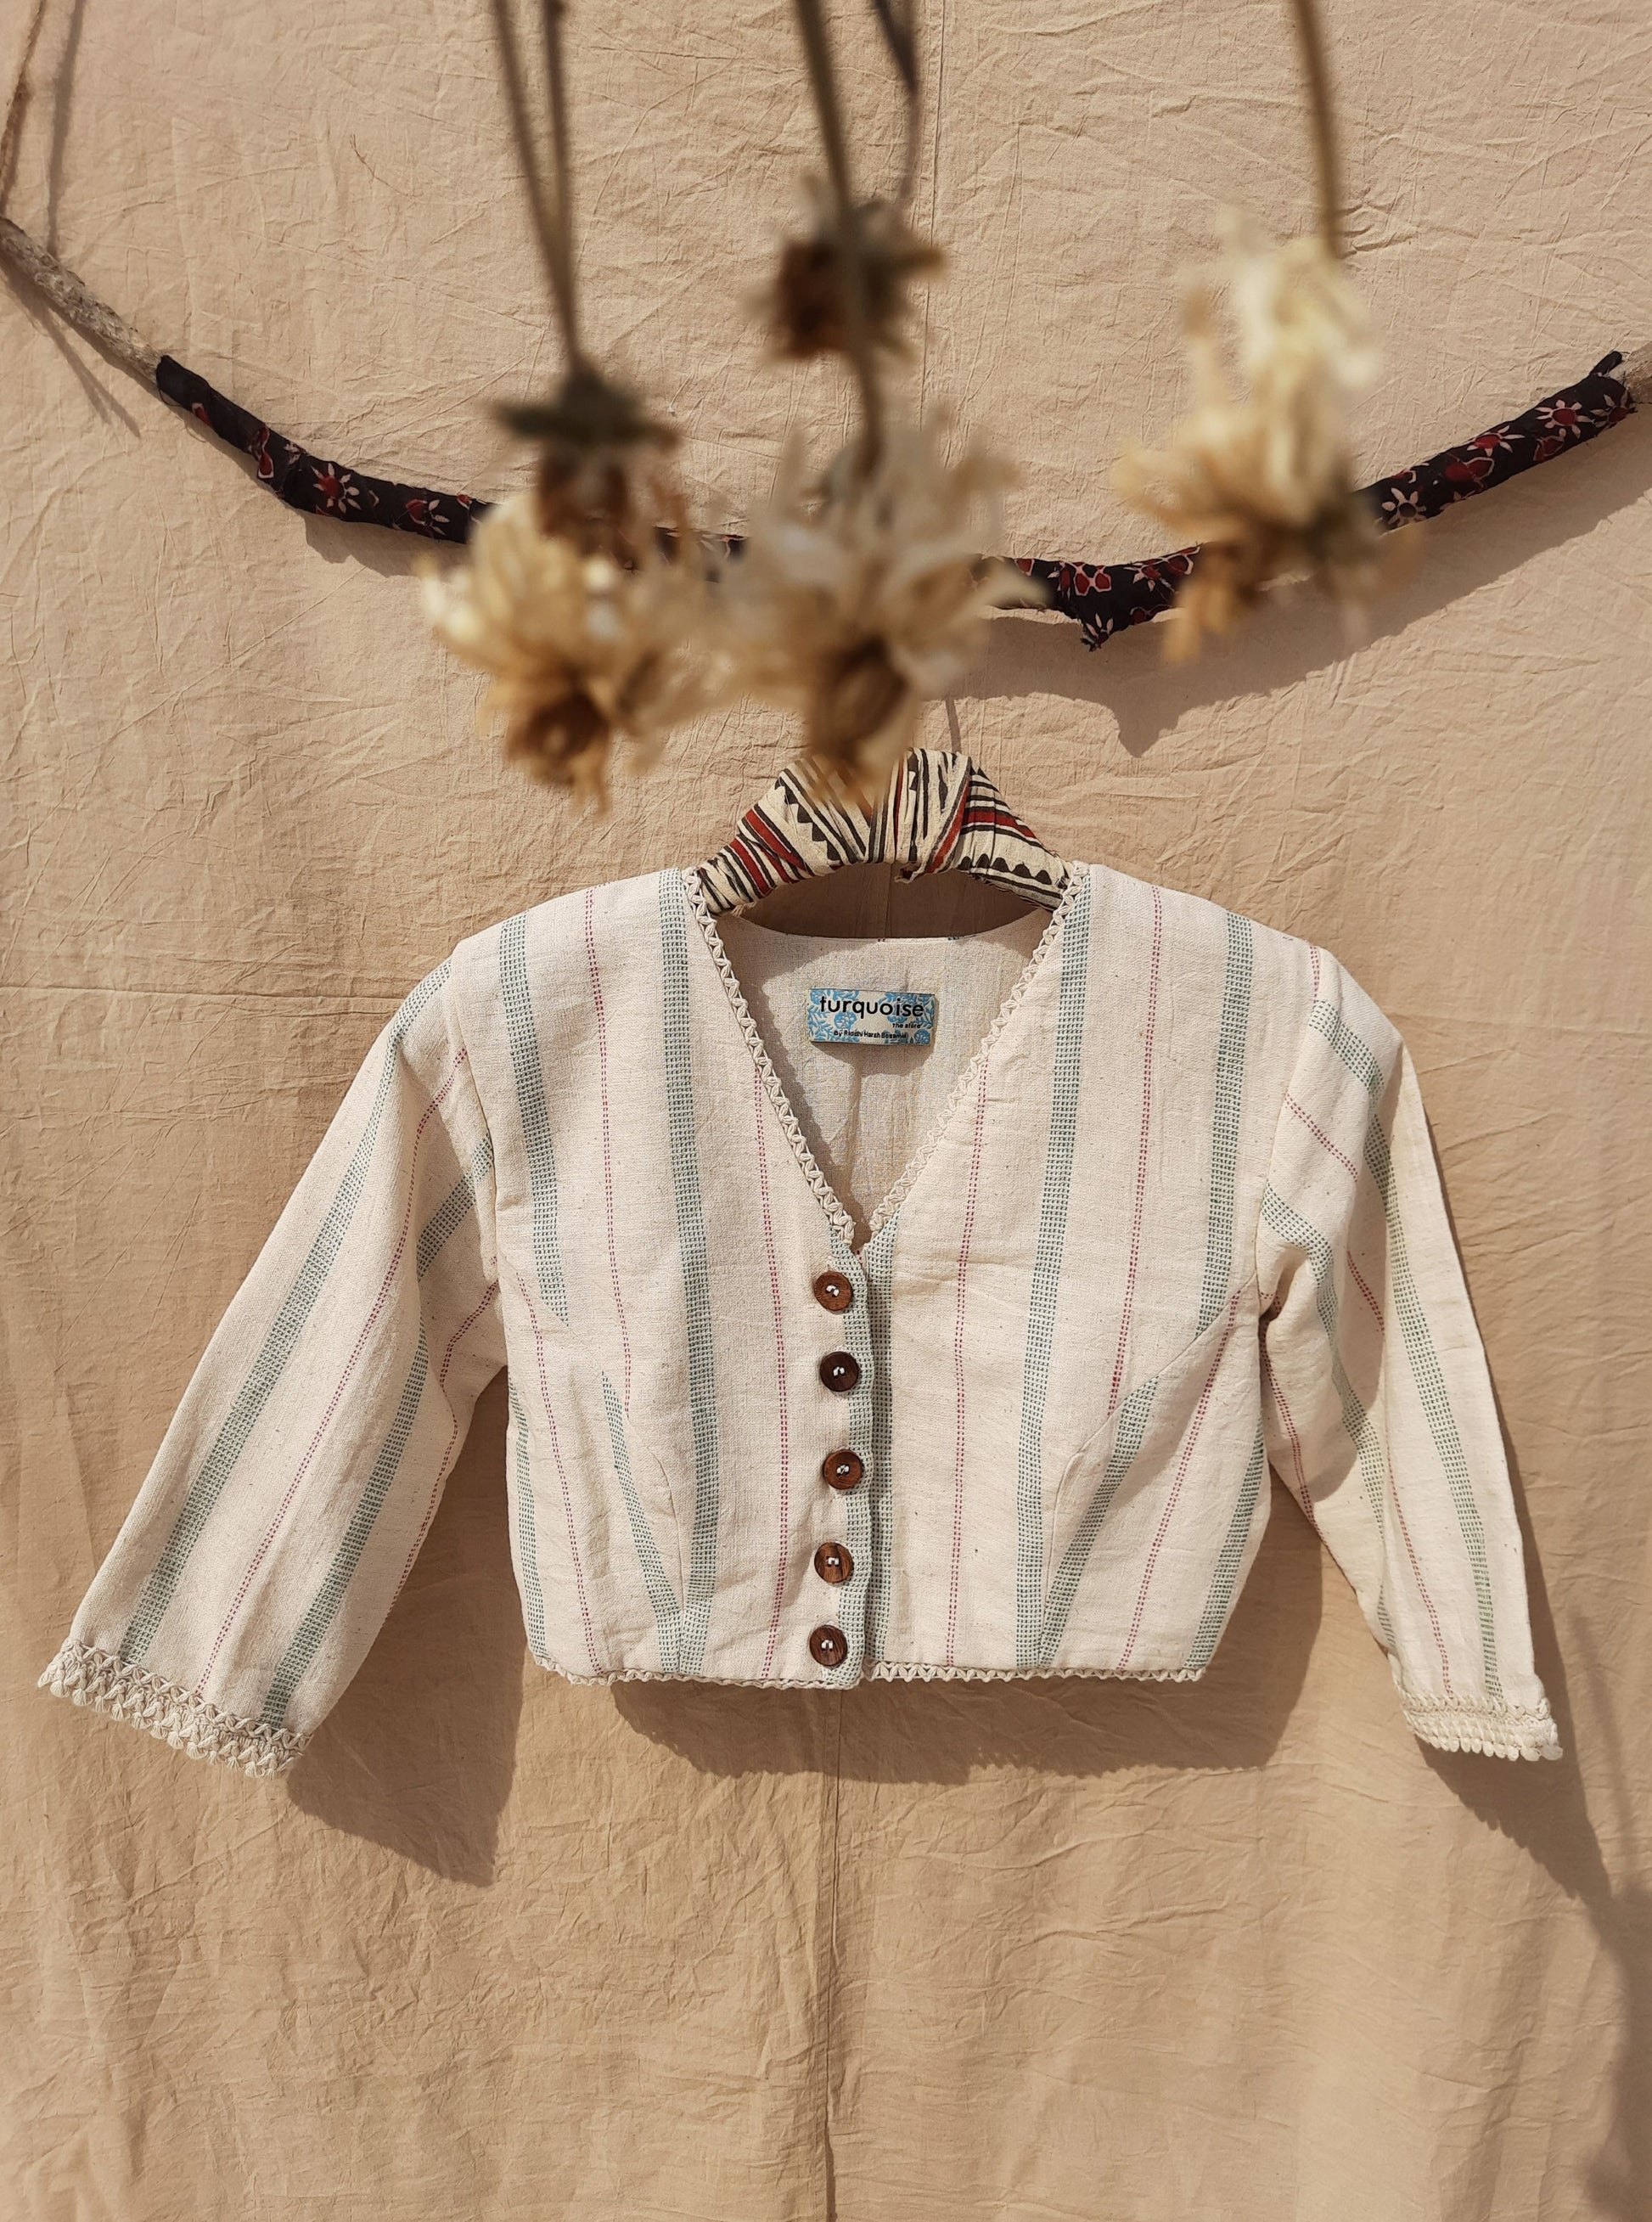 Handwoven kala cotton blouse, Handwoven organic cotton saree blouse, Handmade blouse, Slow fashion